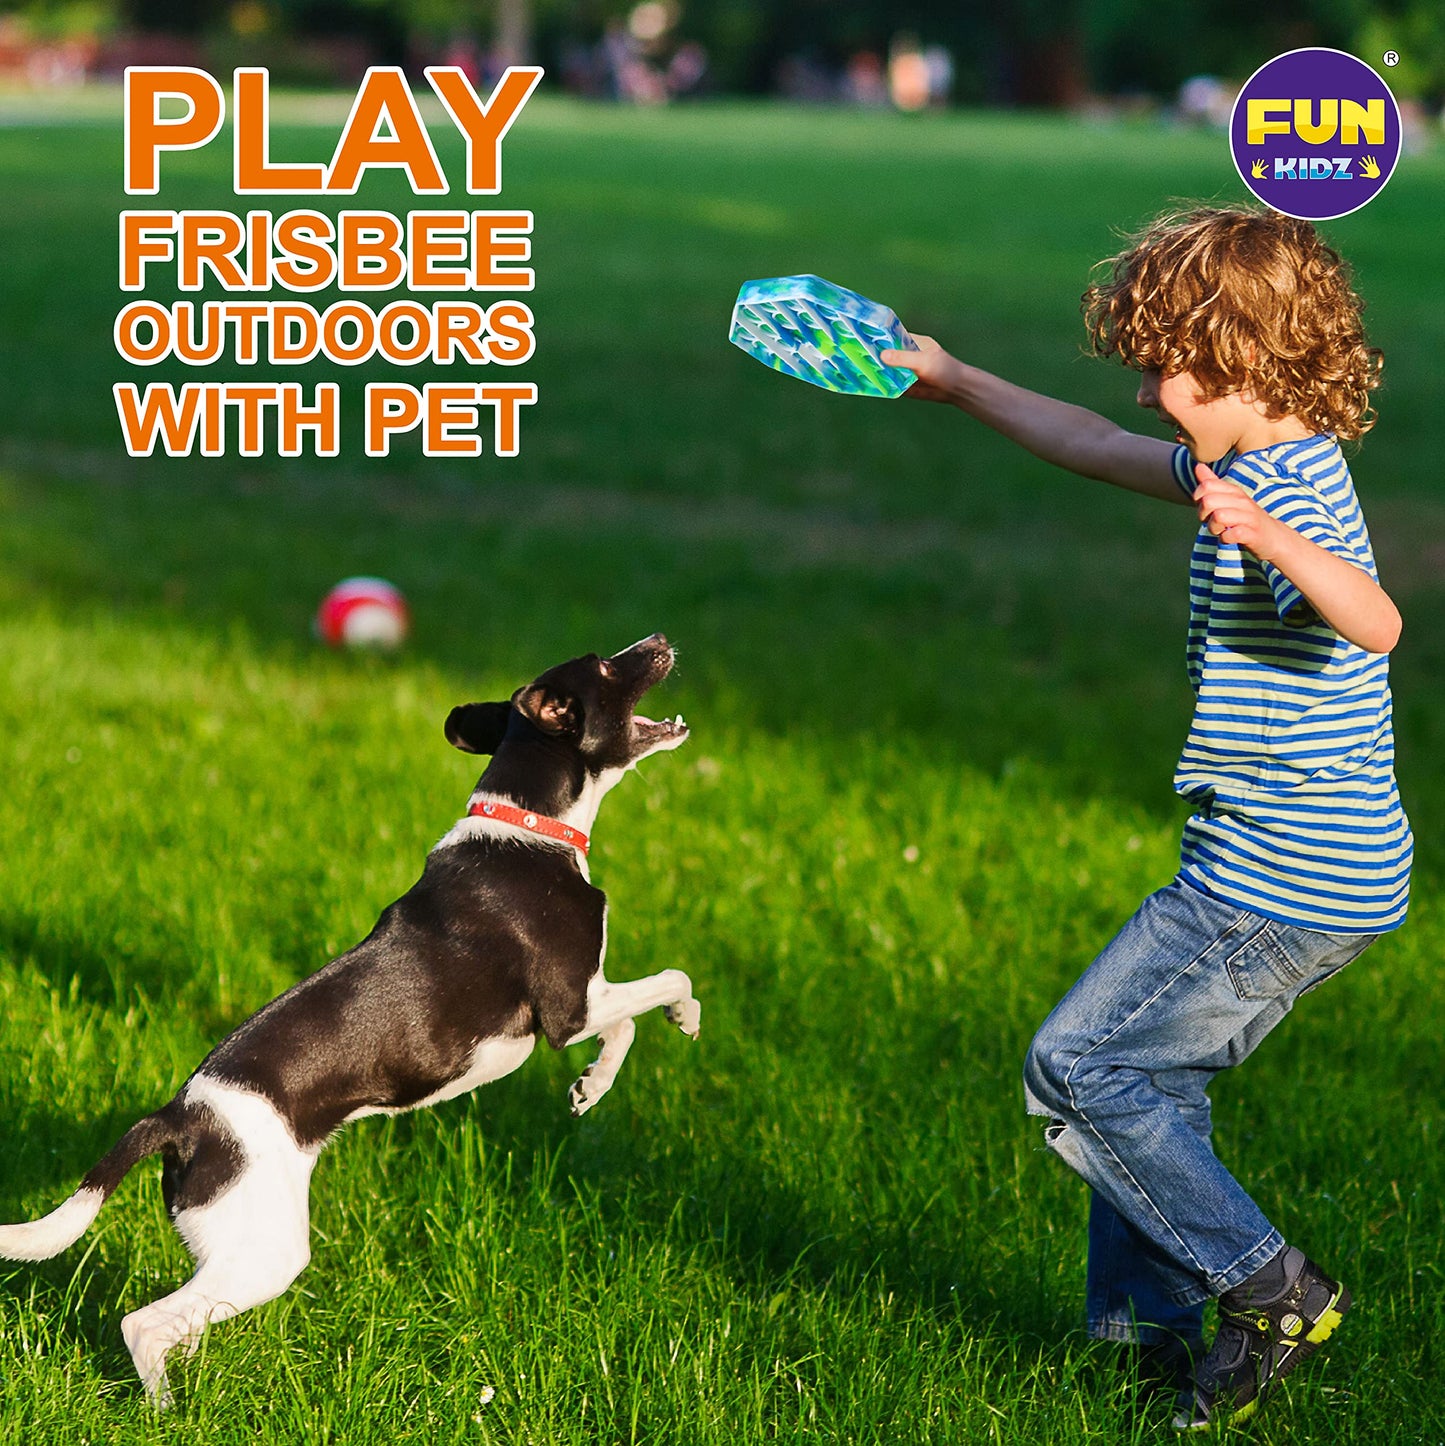 FUNKIDZ Tie Dye Push Pop Bubbles Fidget Toy, Stress Relief Anti-Anxiety Silicone Squeeze Sensory Toy for Kids Boys Girls